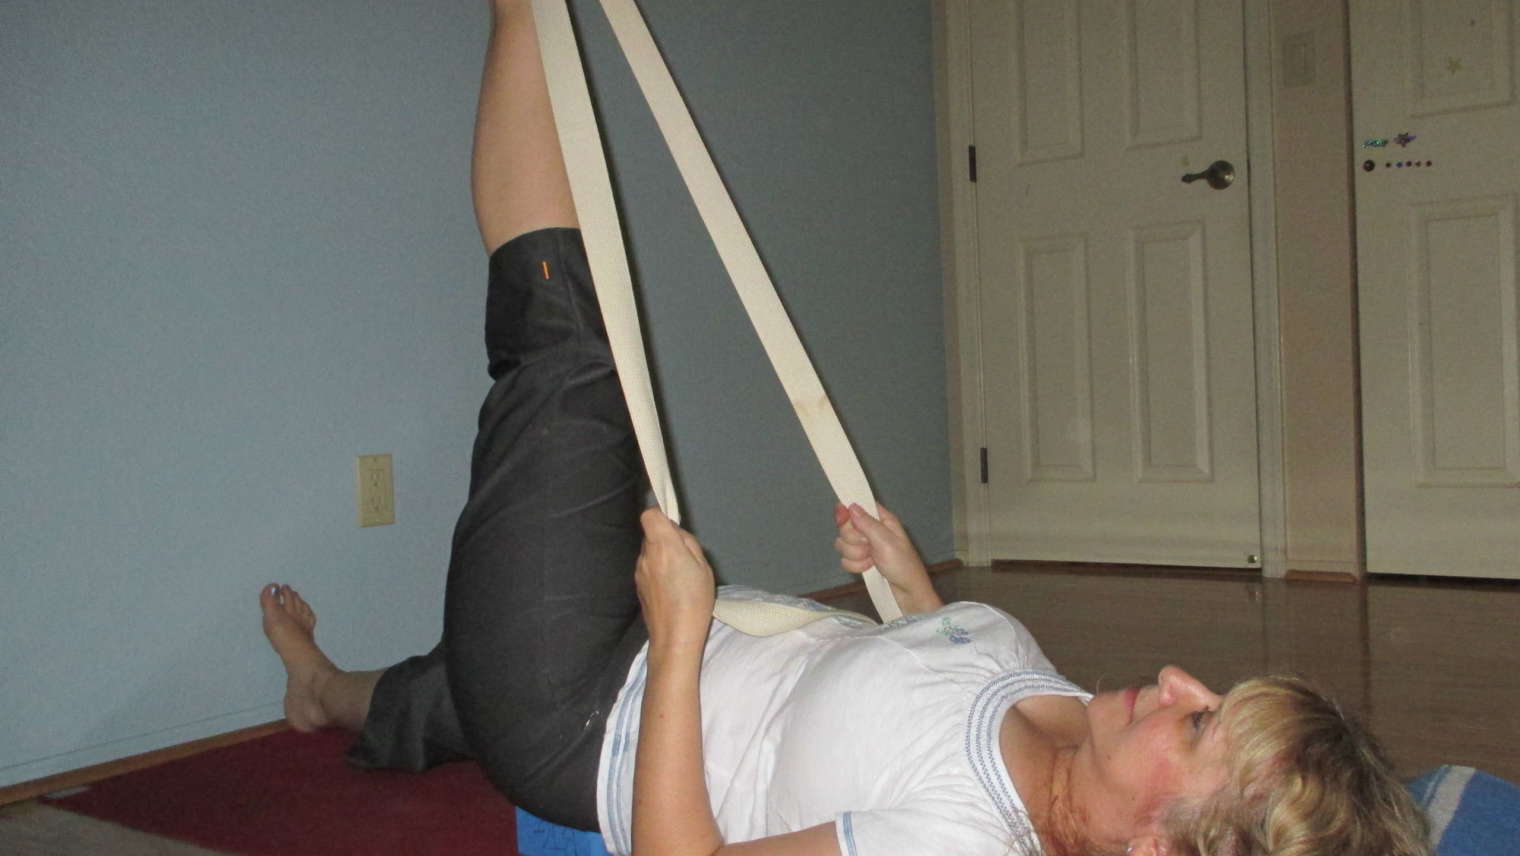 Rediscovering Hip Movement through Yoga